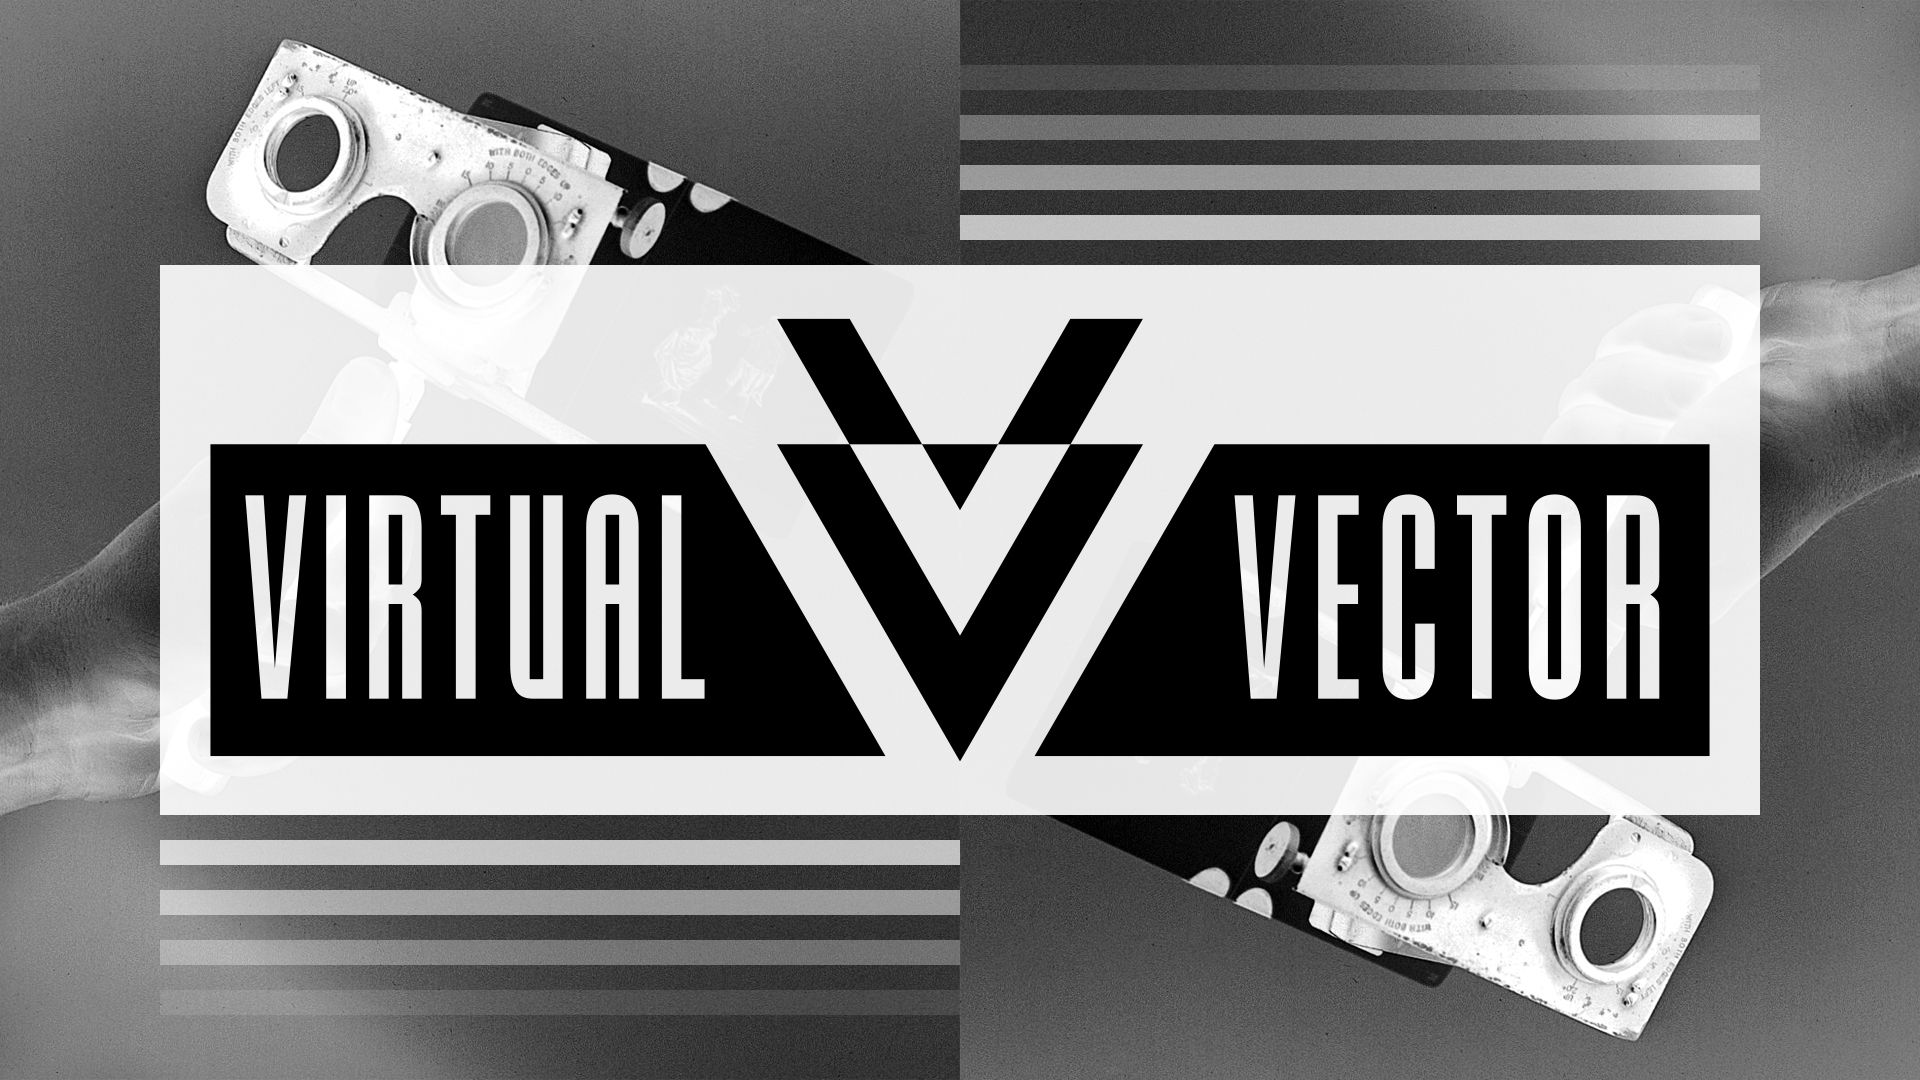 Virtual Vector is shutting down